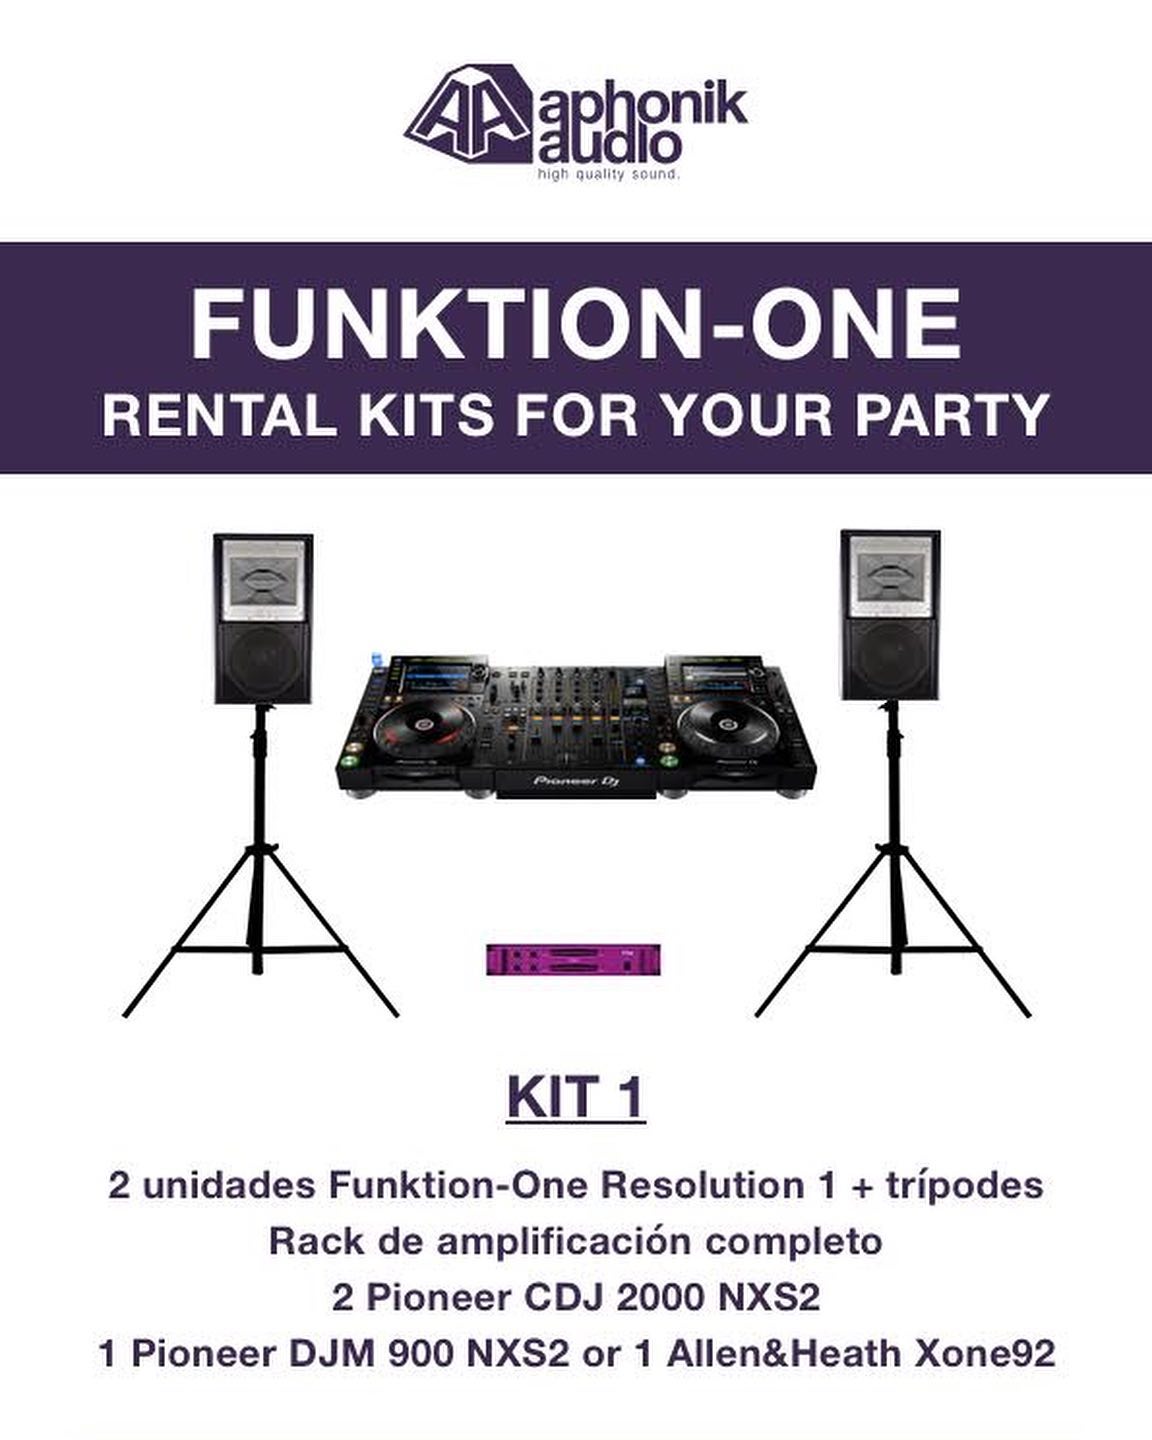 Funktion one Kit 1. 2 x Resulution 1 PA with 2 x Pioneer CDJ 2000 nxs 2 and 1 x DJM 900 nxs2 dj backline material Aphonik Audio Barcelona rentals